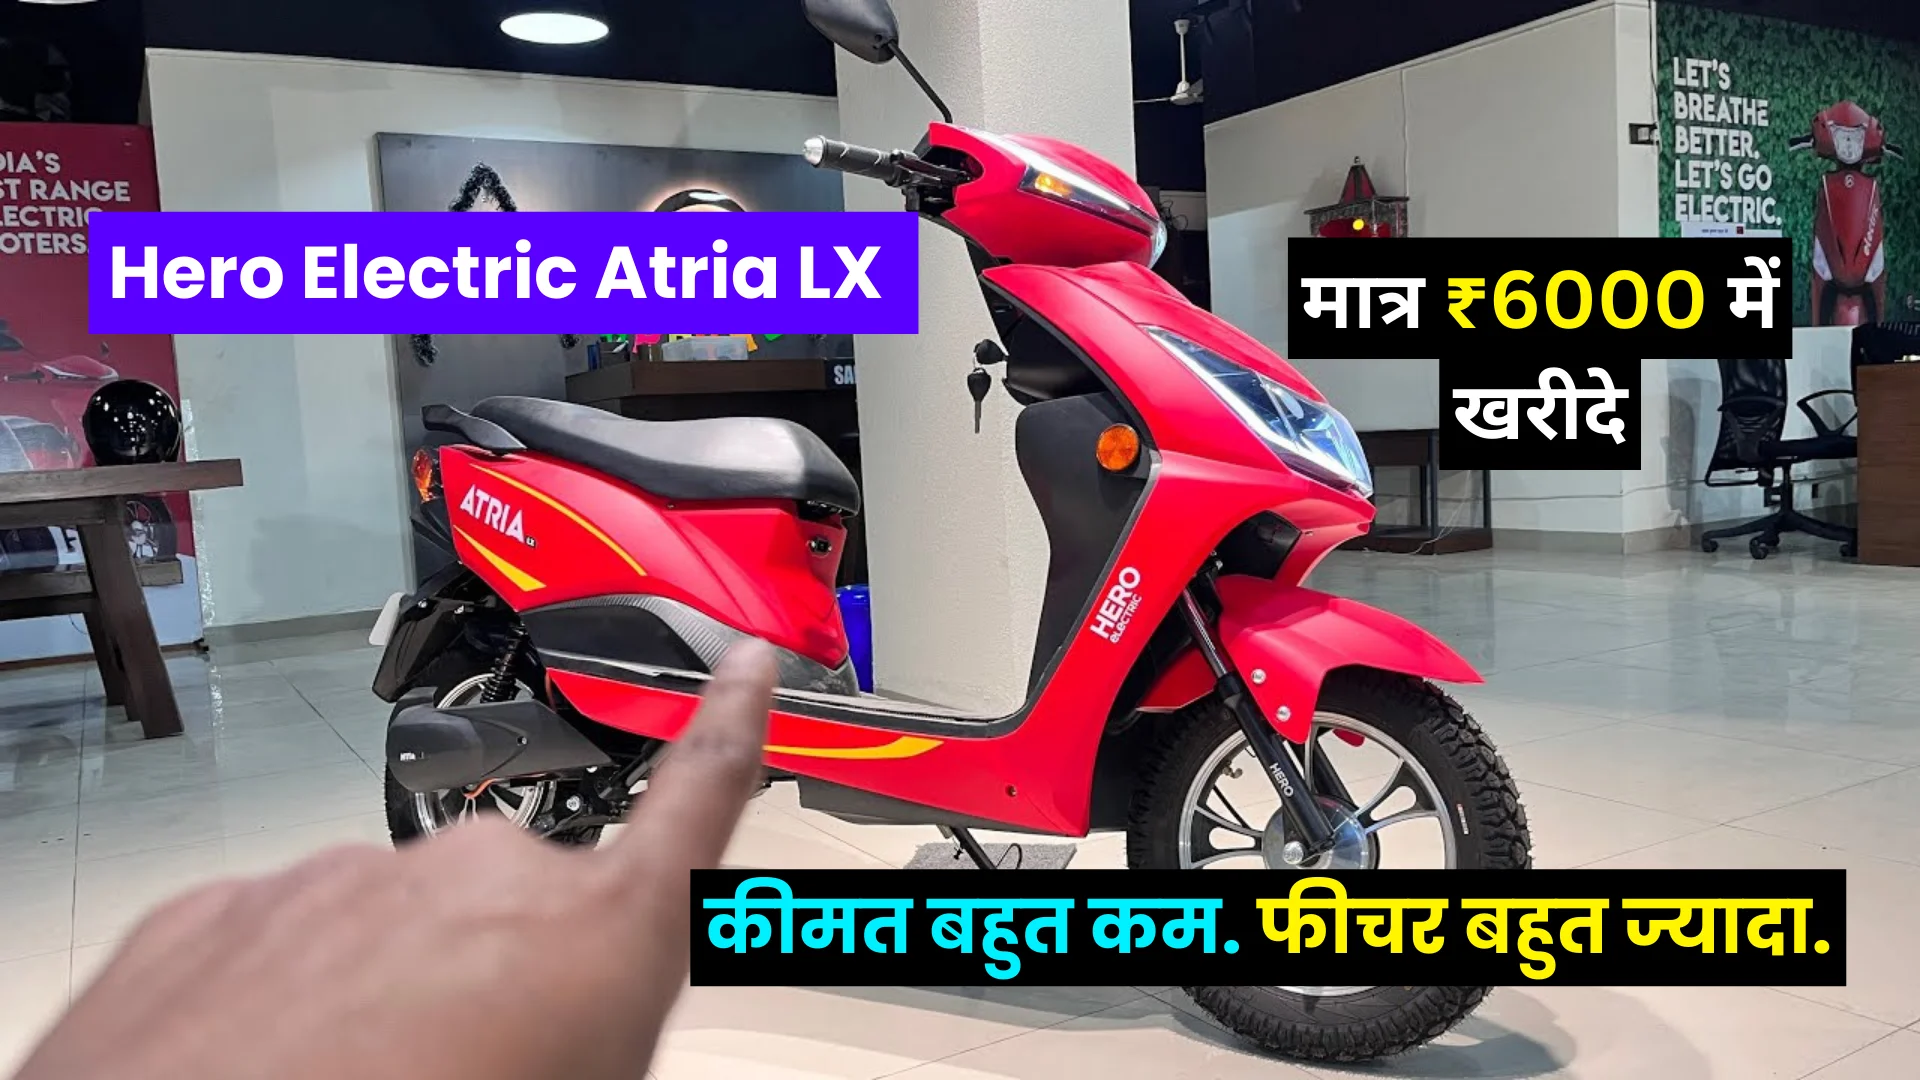 Hero Electric Atria LX Scooter